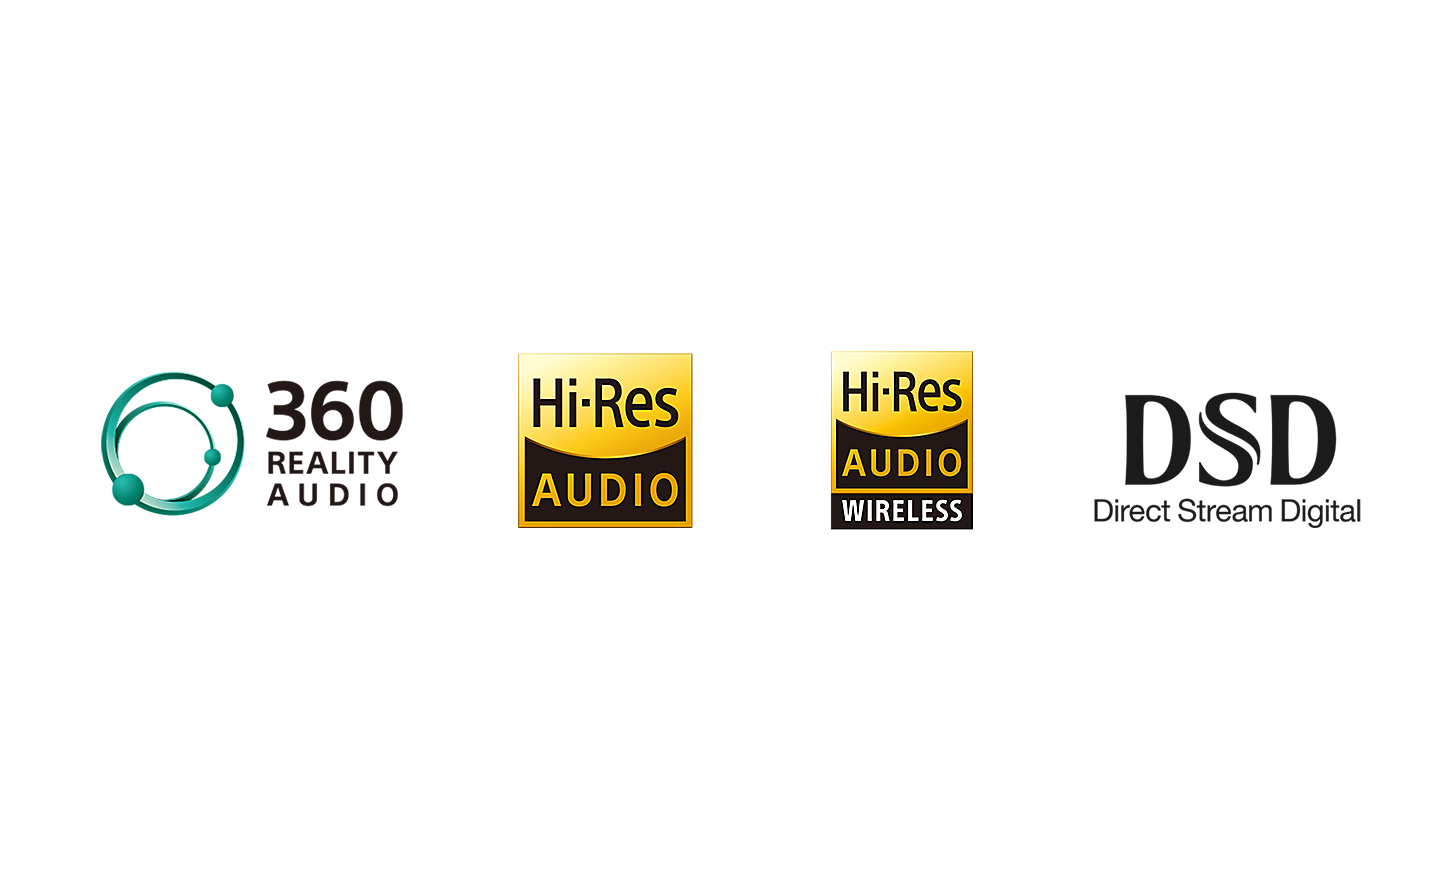 Logotip 360 Reality Audio, logotip Hi-Res Audio, logotip Hi-Res Audio Wireless, logotip DSD Direct Stream Digital